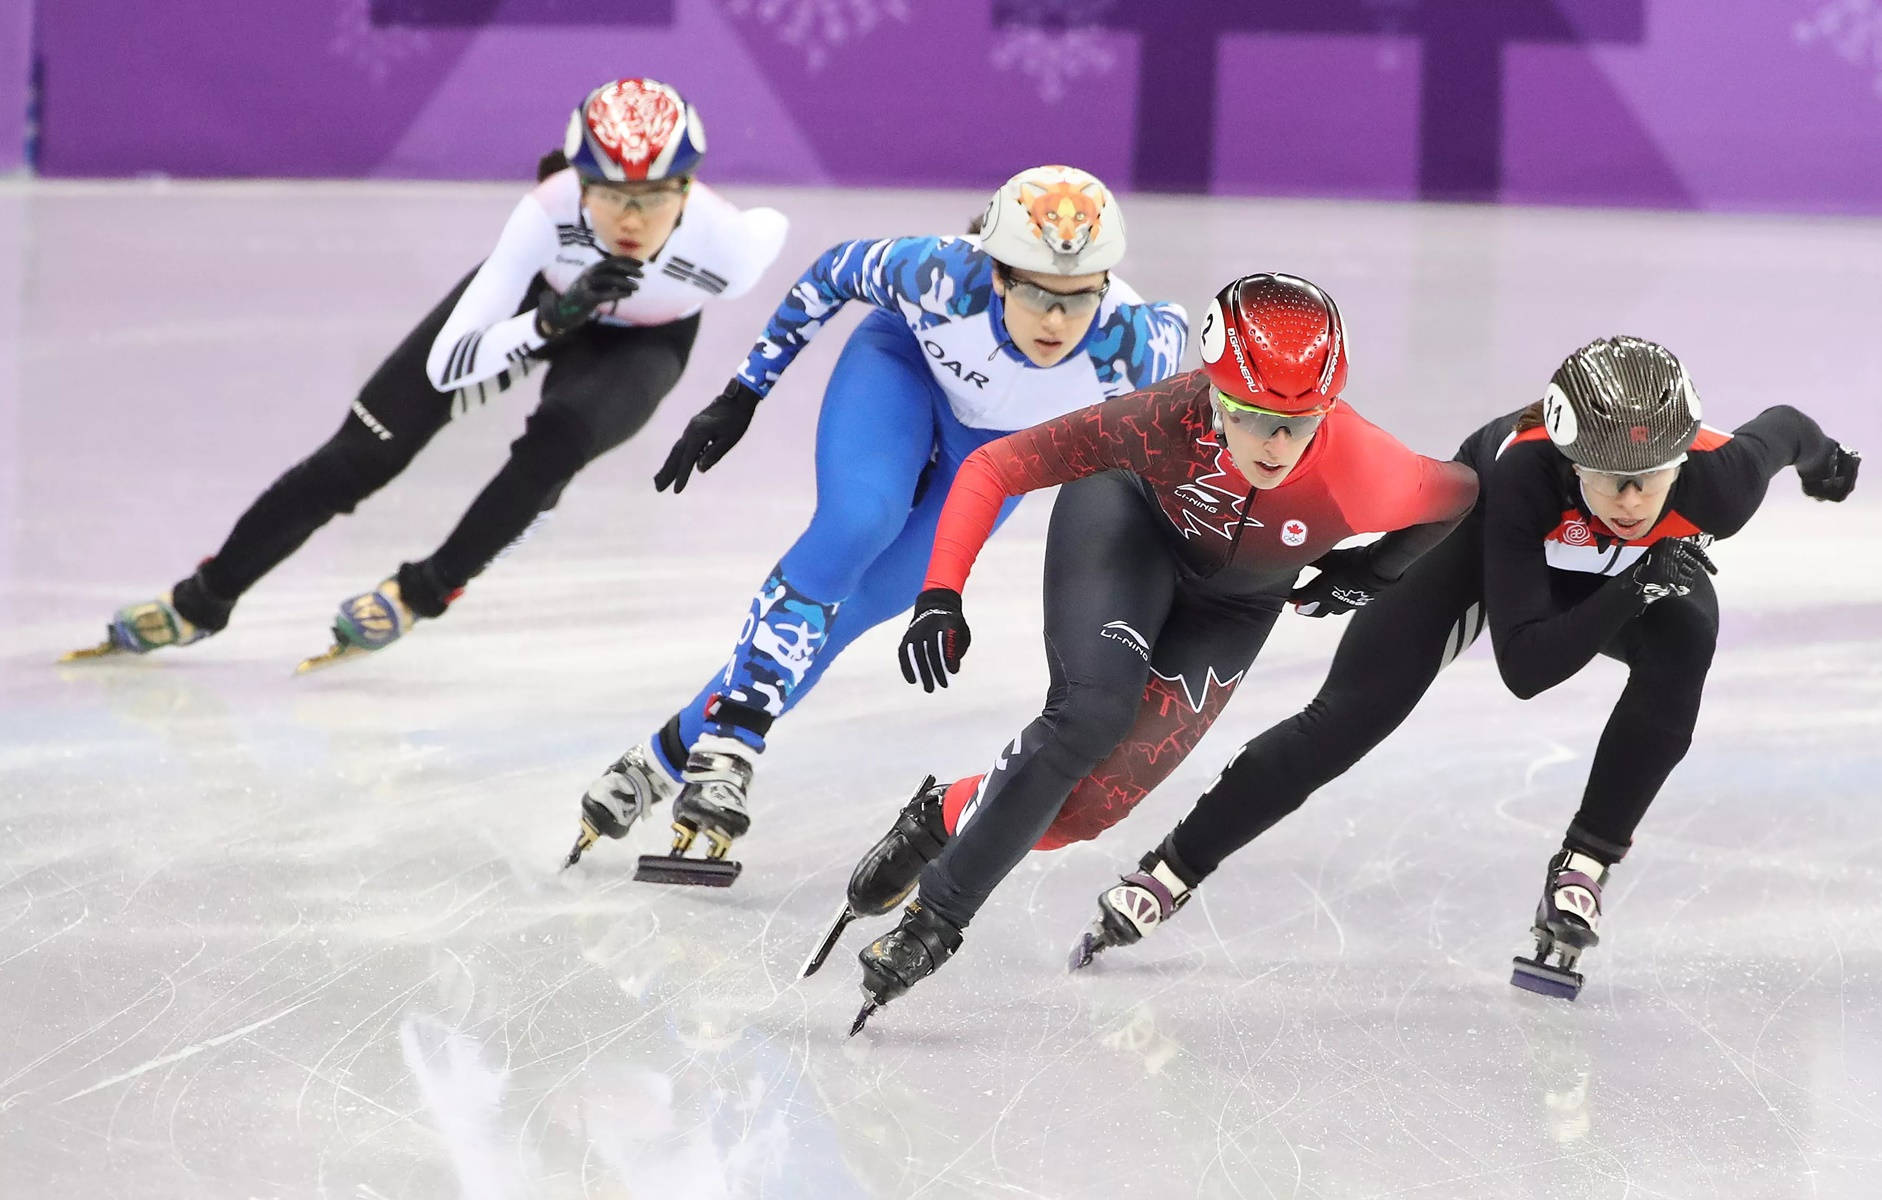 Speed Skating In Women's Short Track Relay 2018 Wallpaper